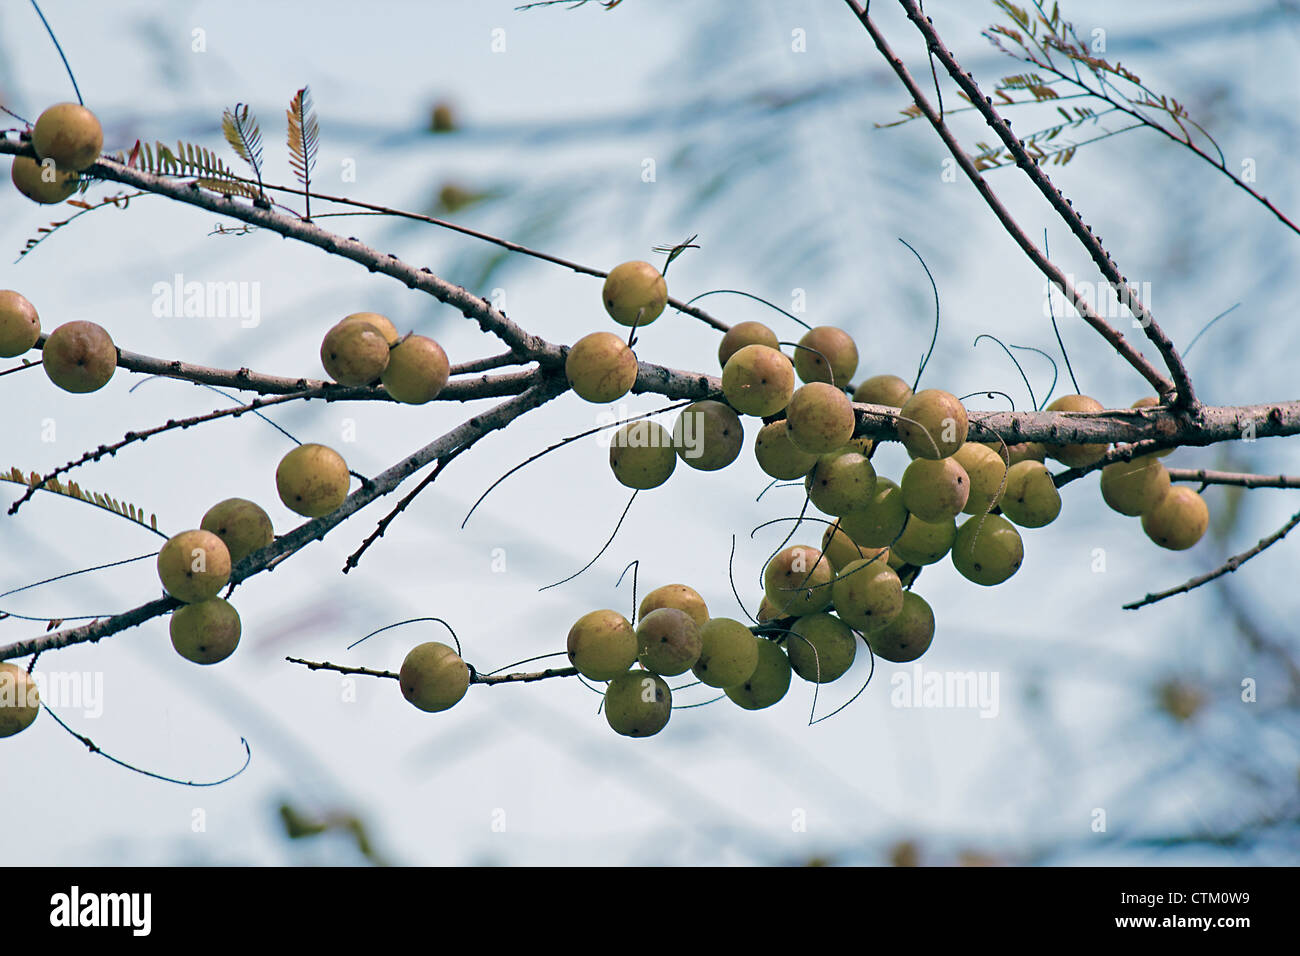 Amla, Emblica officinalis, Indian Gooseberries growing on tree, Ayurvedic medicine and herb fruits. Stock Photo